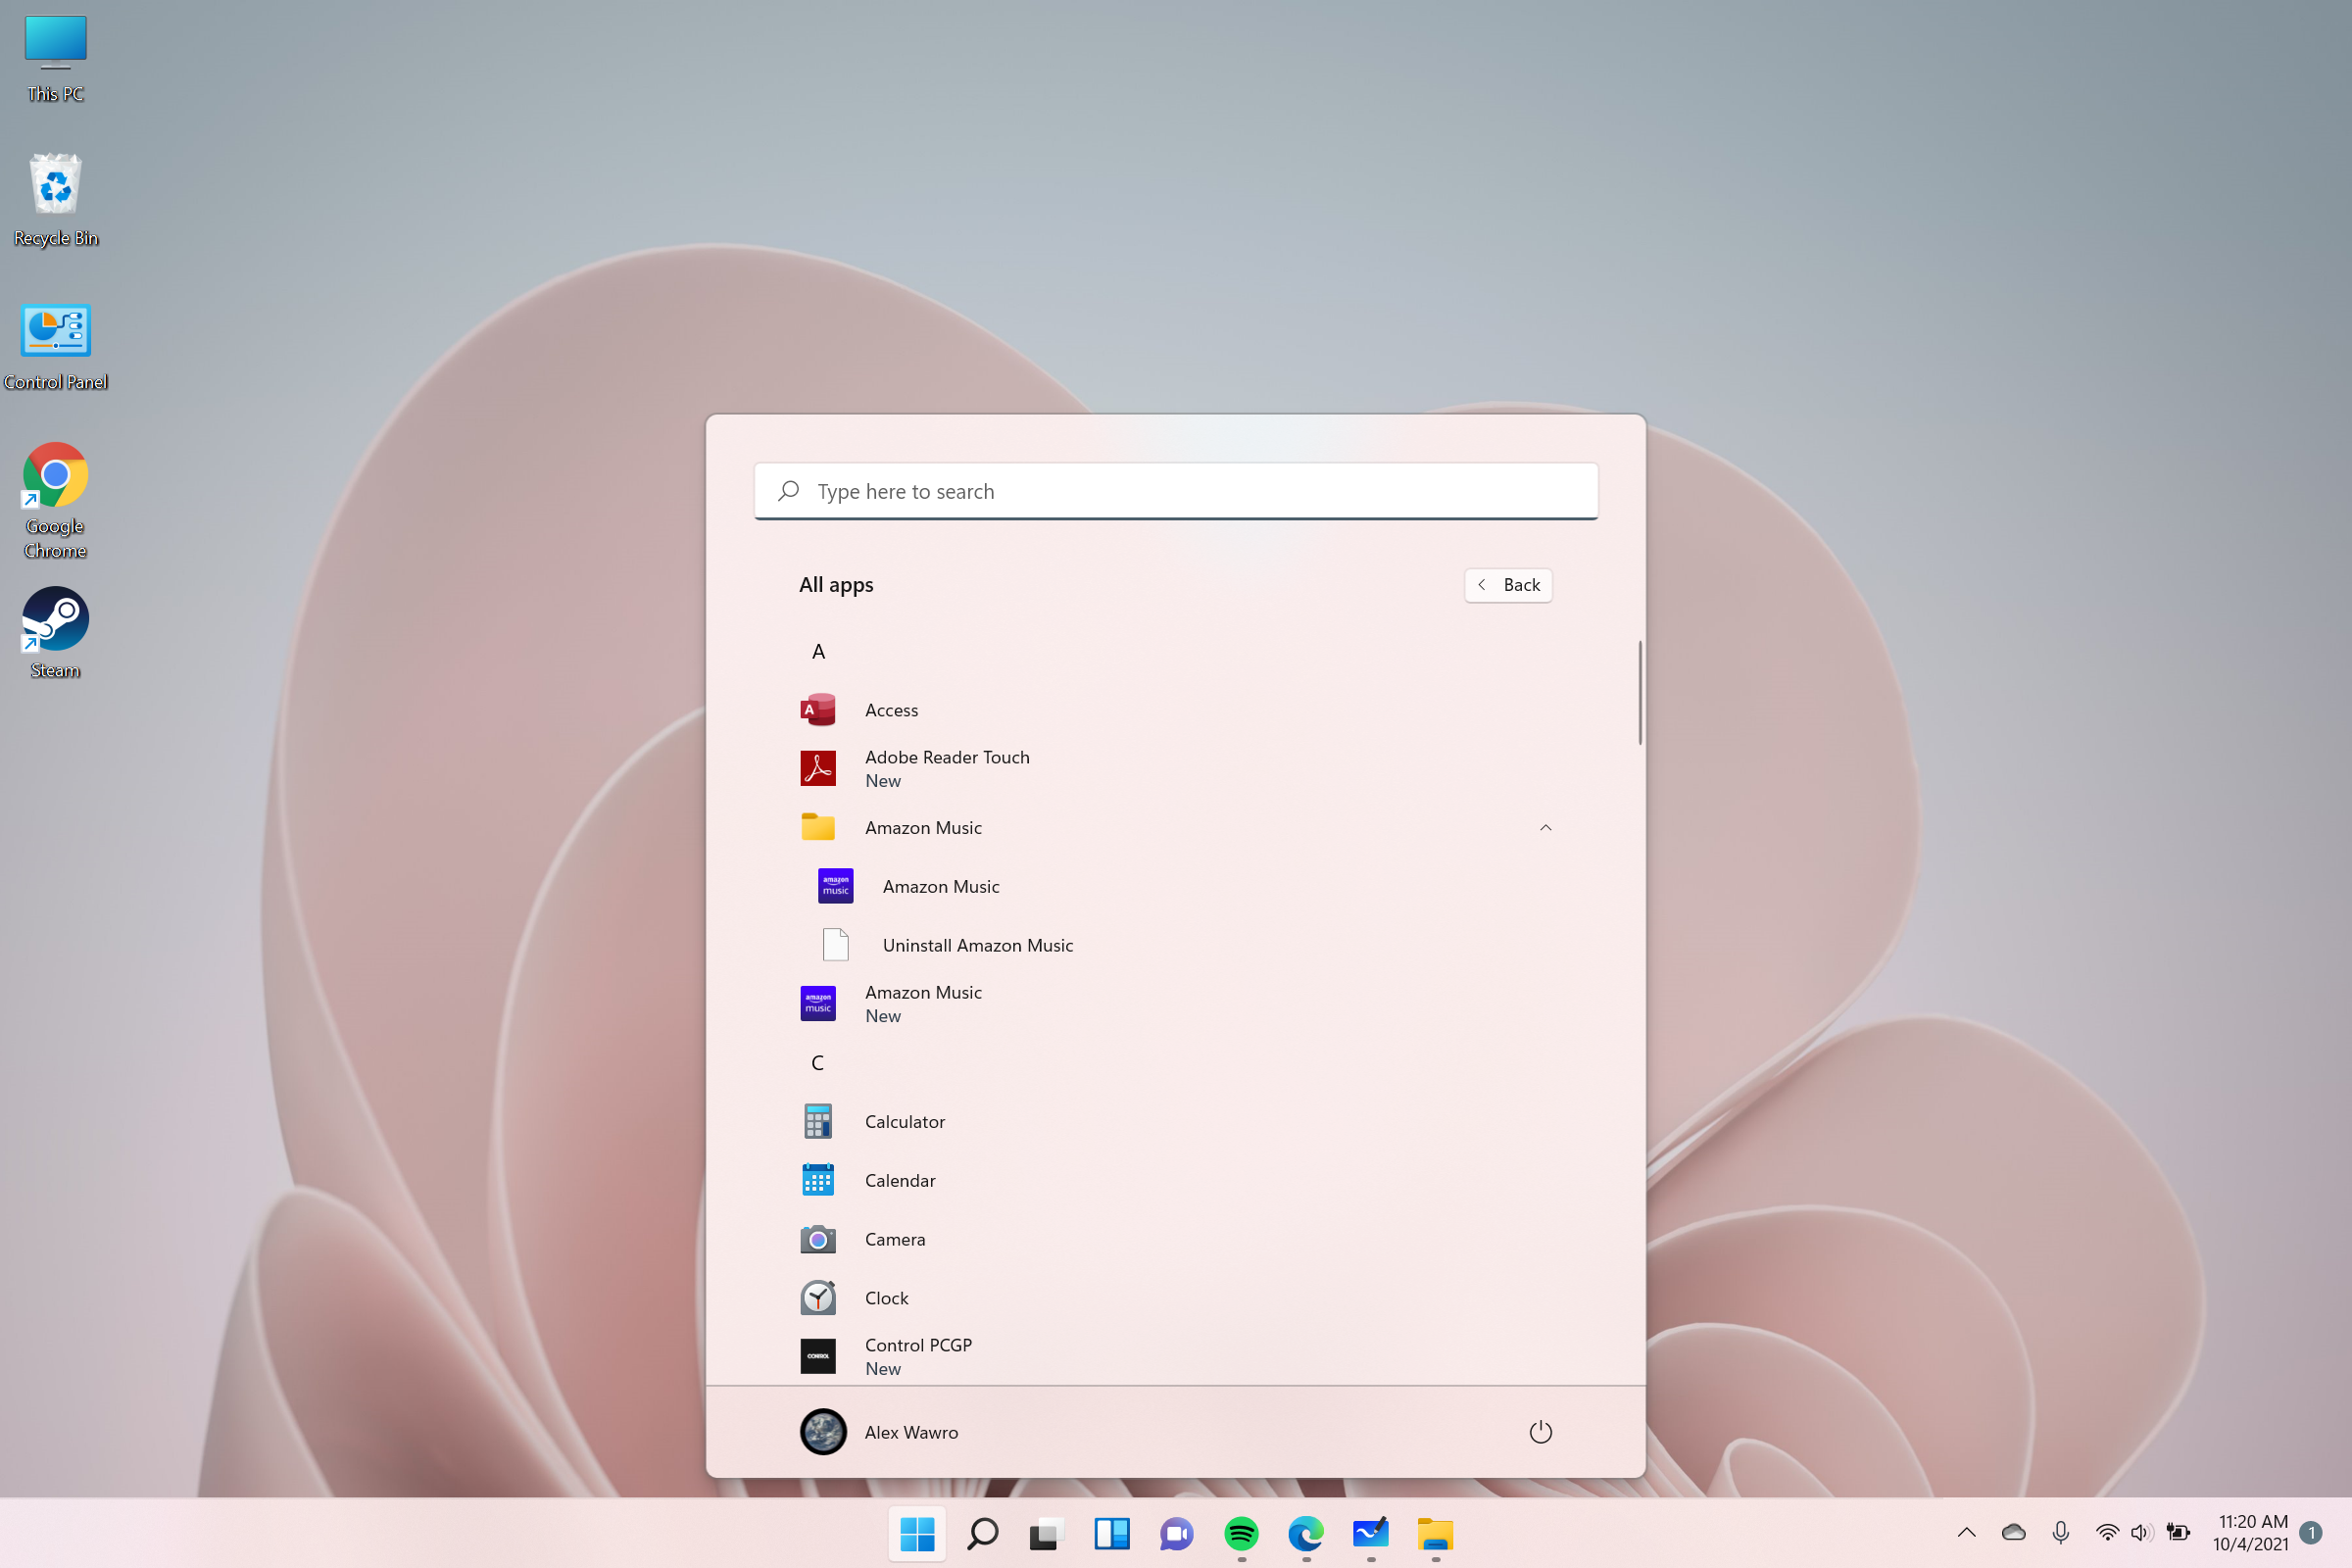 Windows 11 Start menu - all apps view